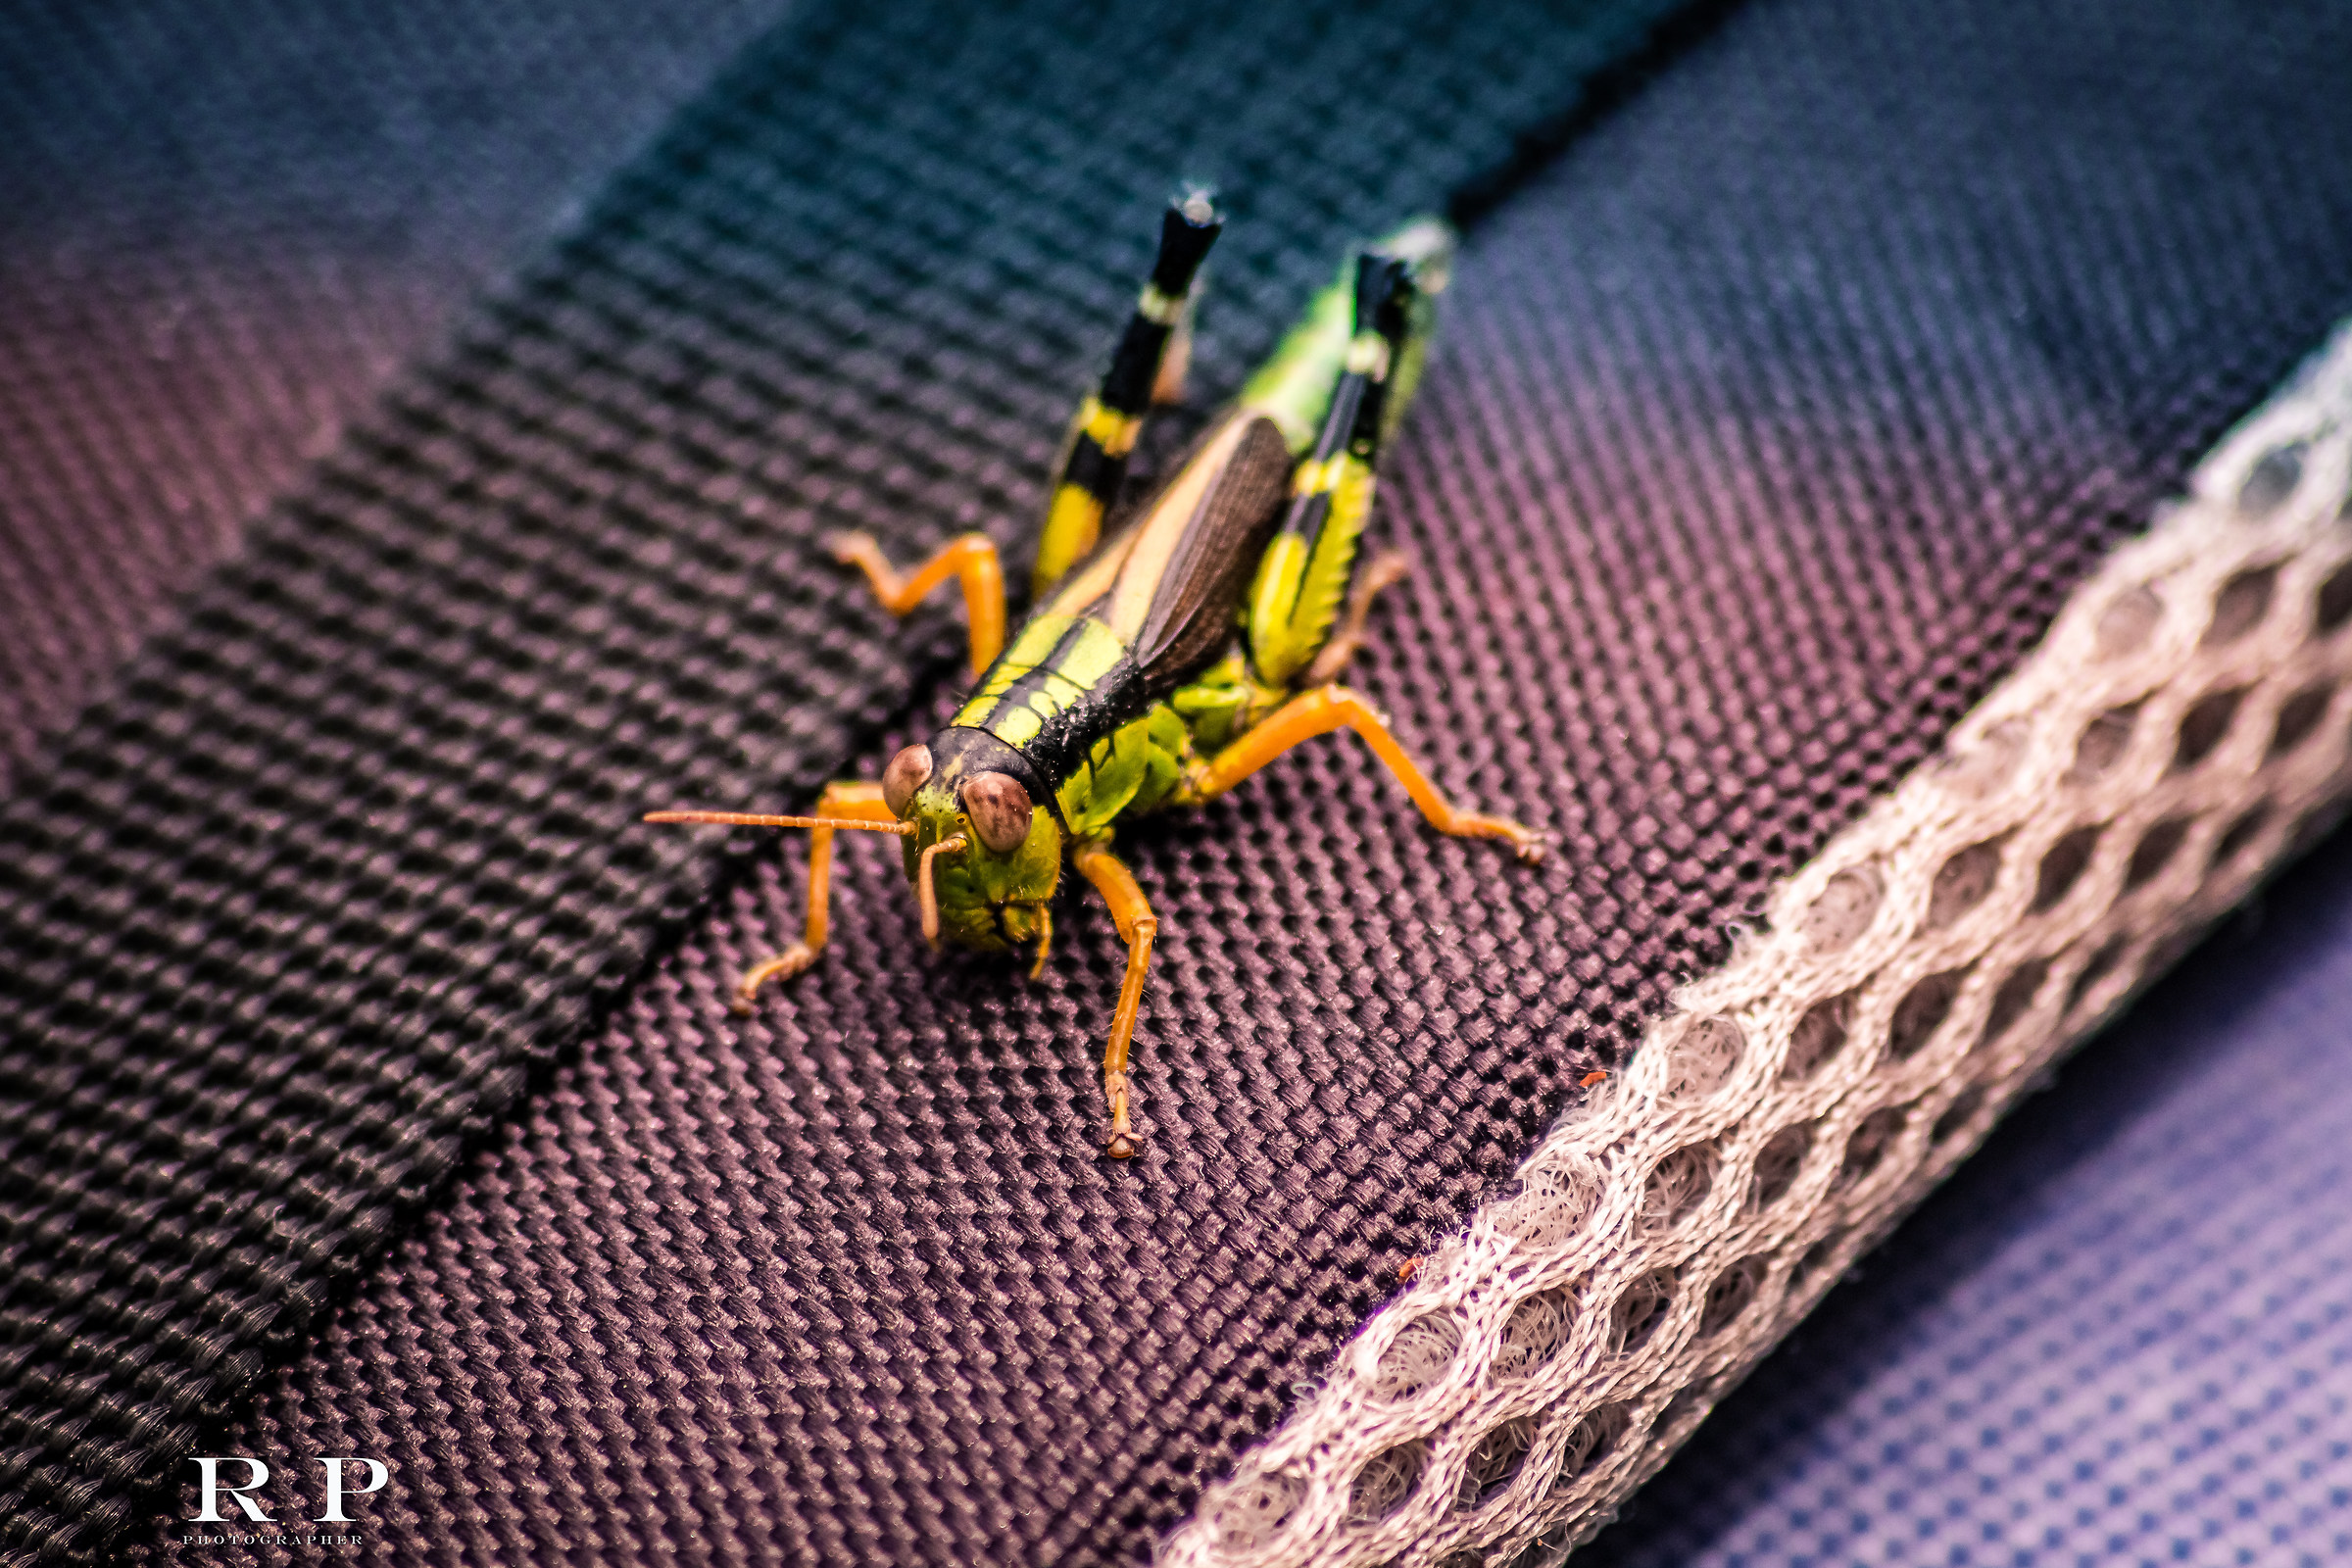 A nice green locust...